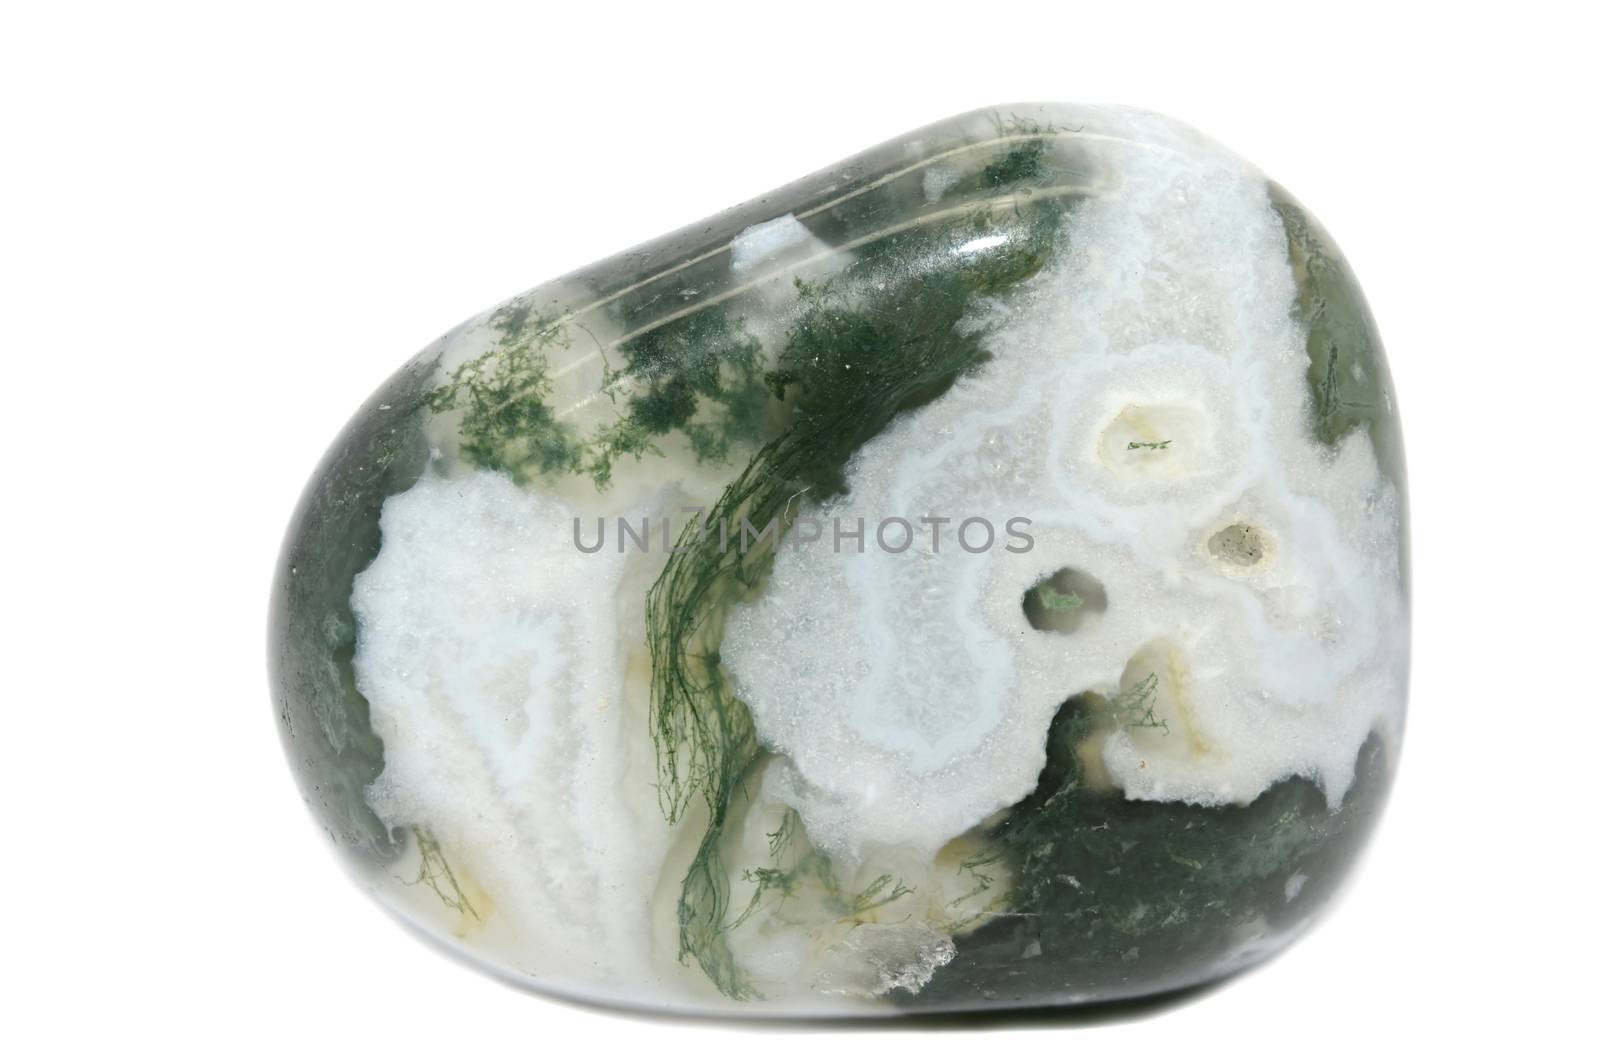 Sample of a beautiful tumbled Tree Agate semiprecious stones isolated on white